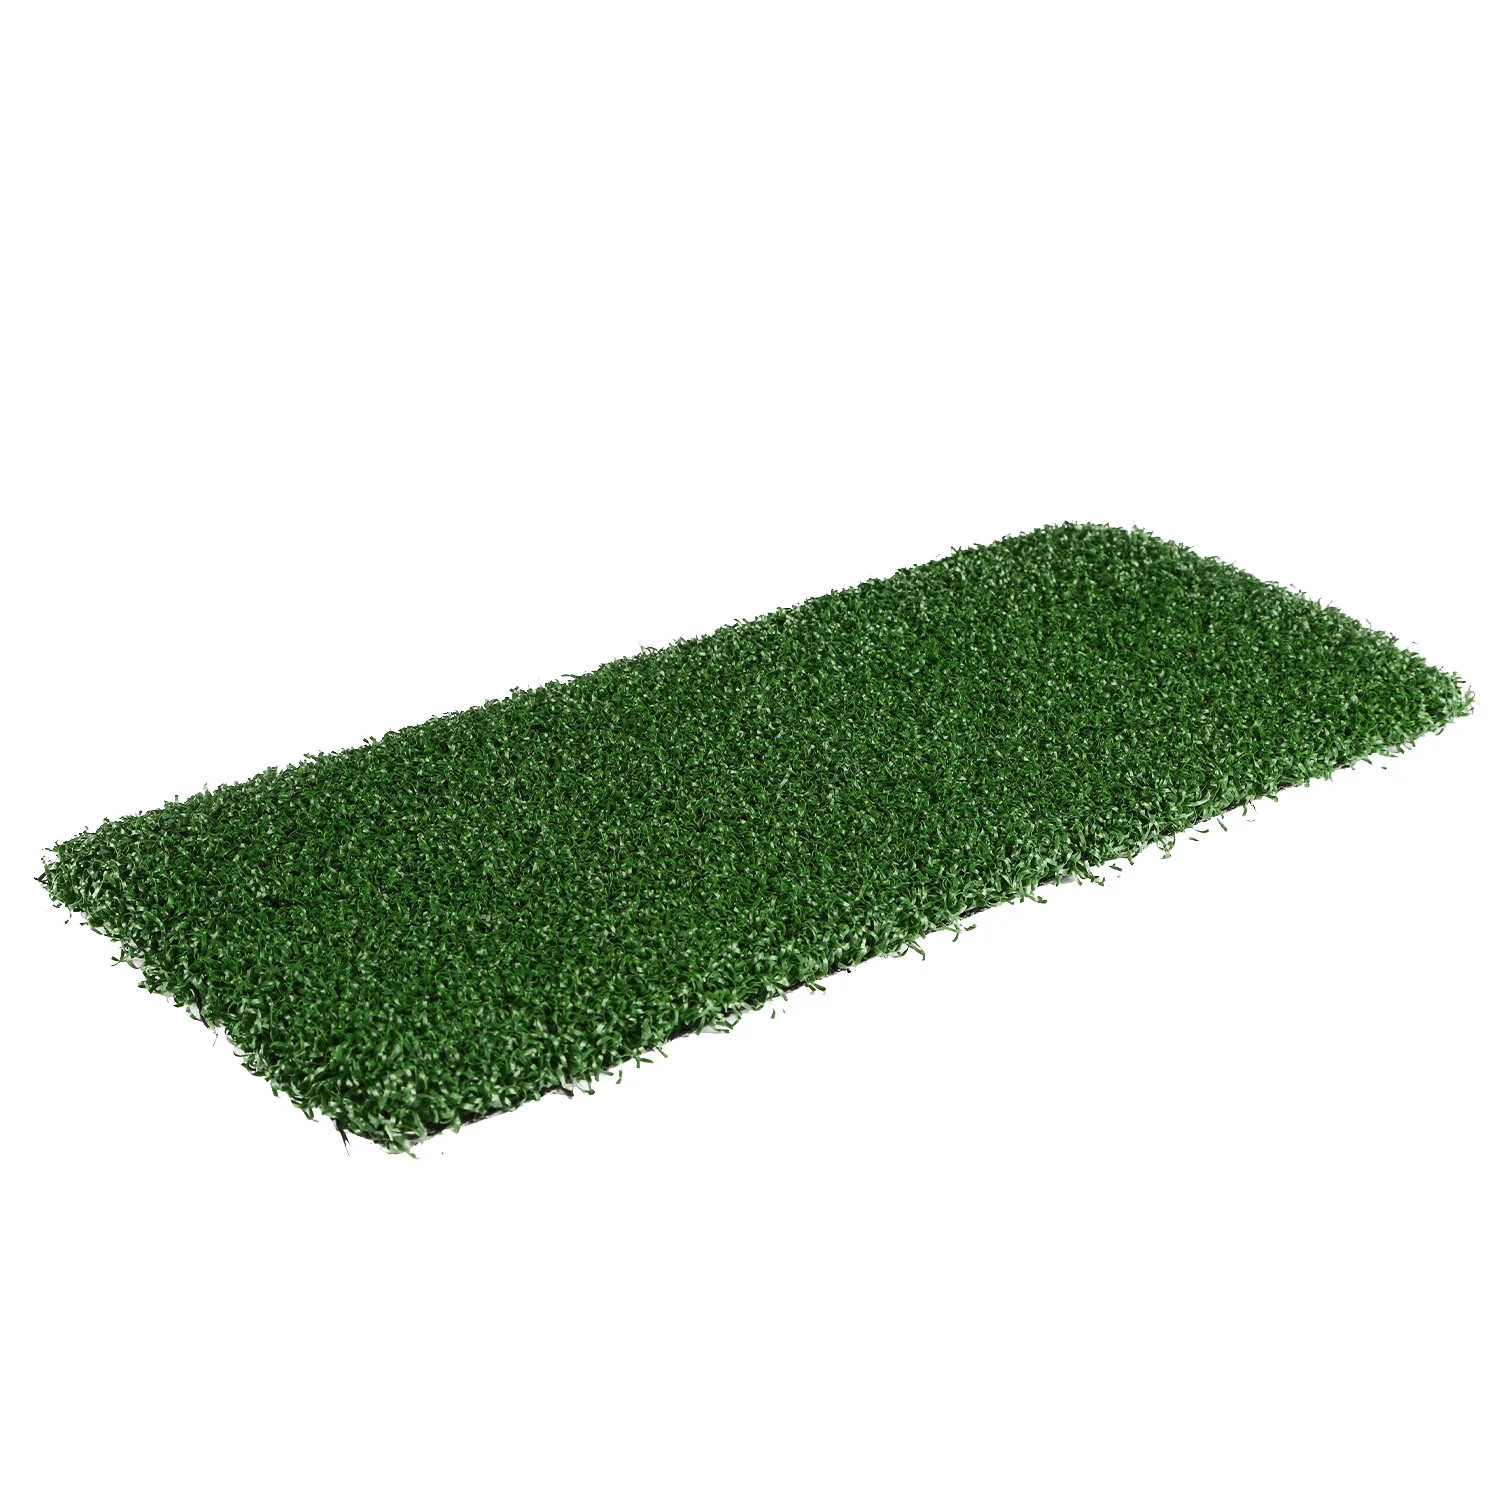 Customizable Sport Flooring Cesped Padel Artificial Grass For Golf Gateball Padel Tennis (1600530193527)